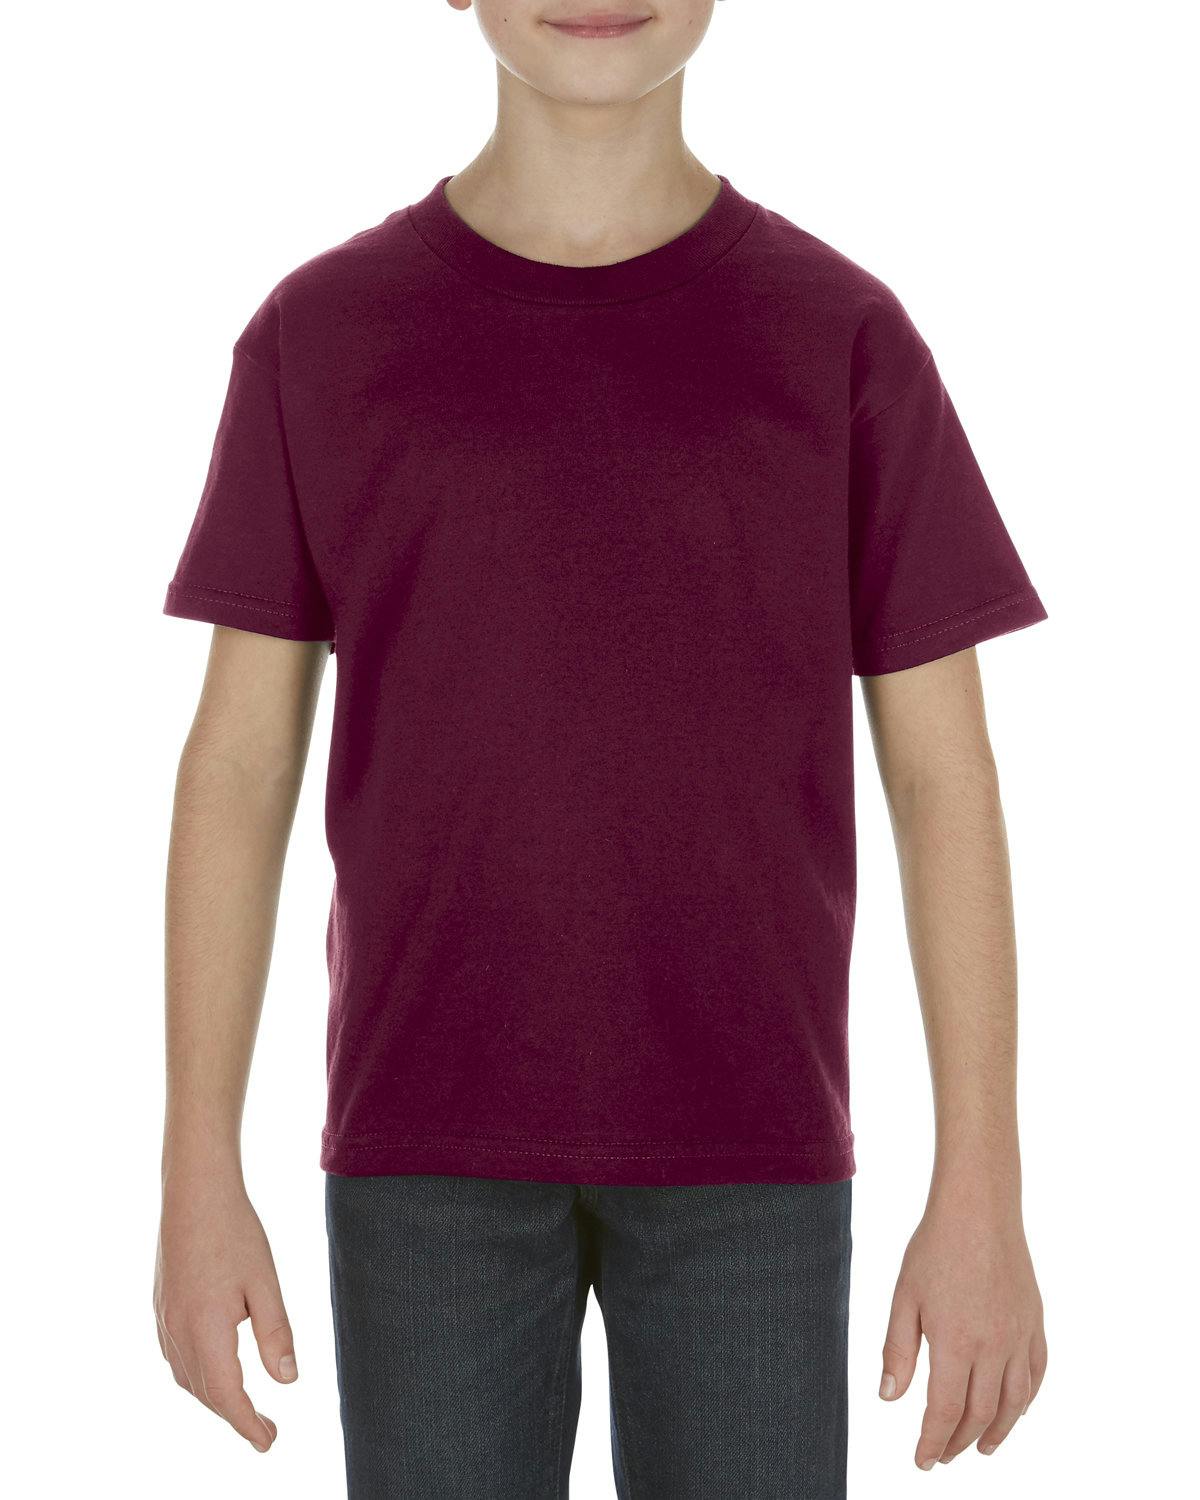 Image for Youth 5.1 oz., 100% Soft Spun Cotton T-Shirt